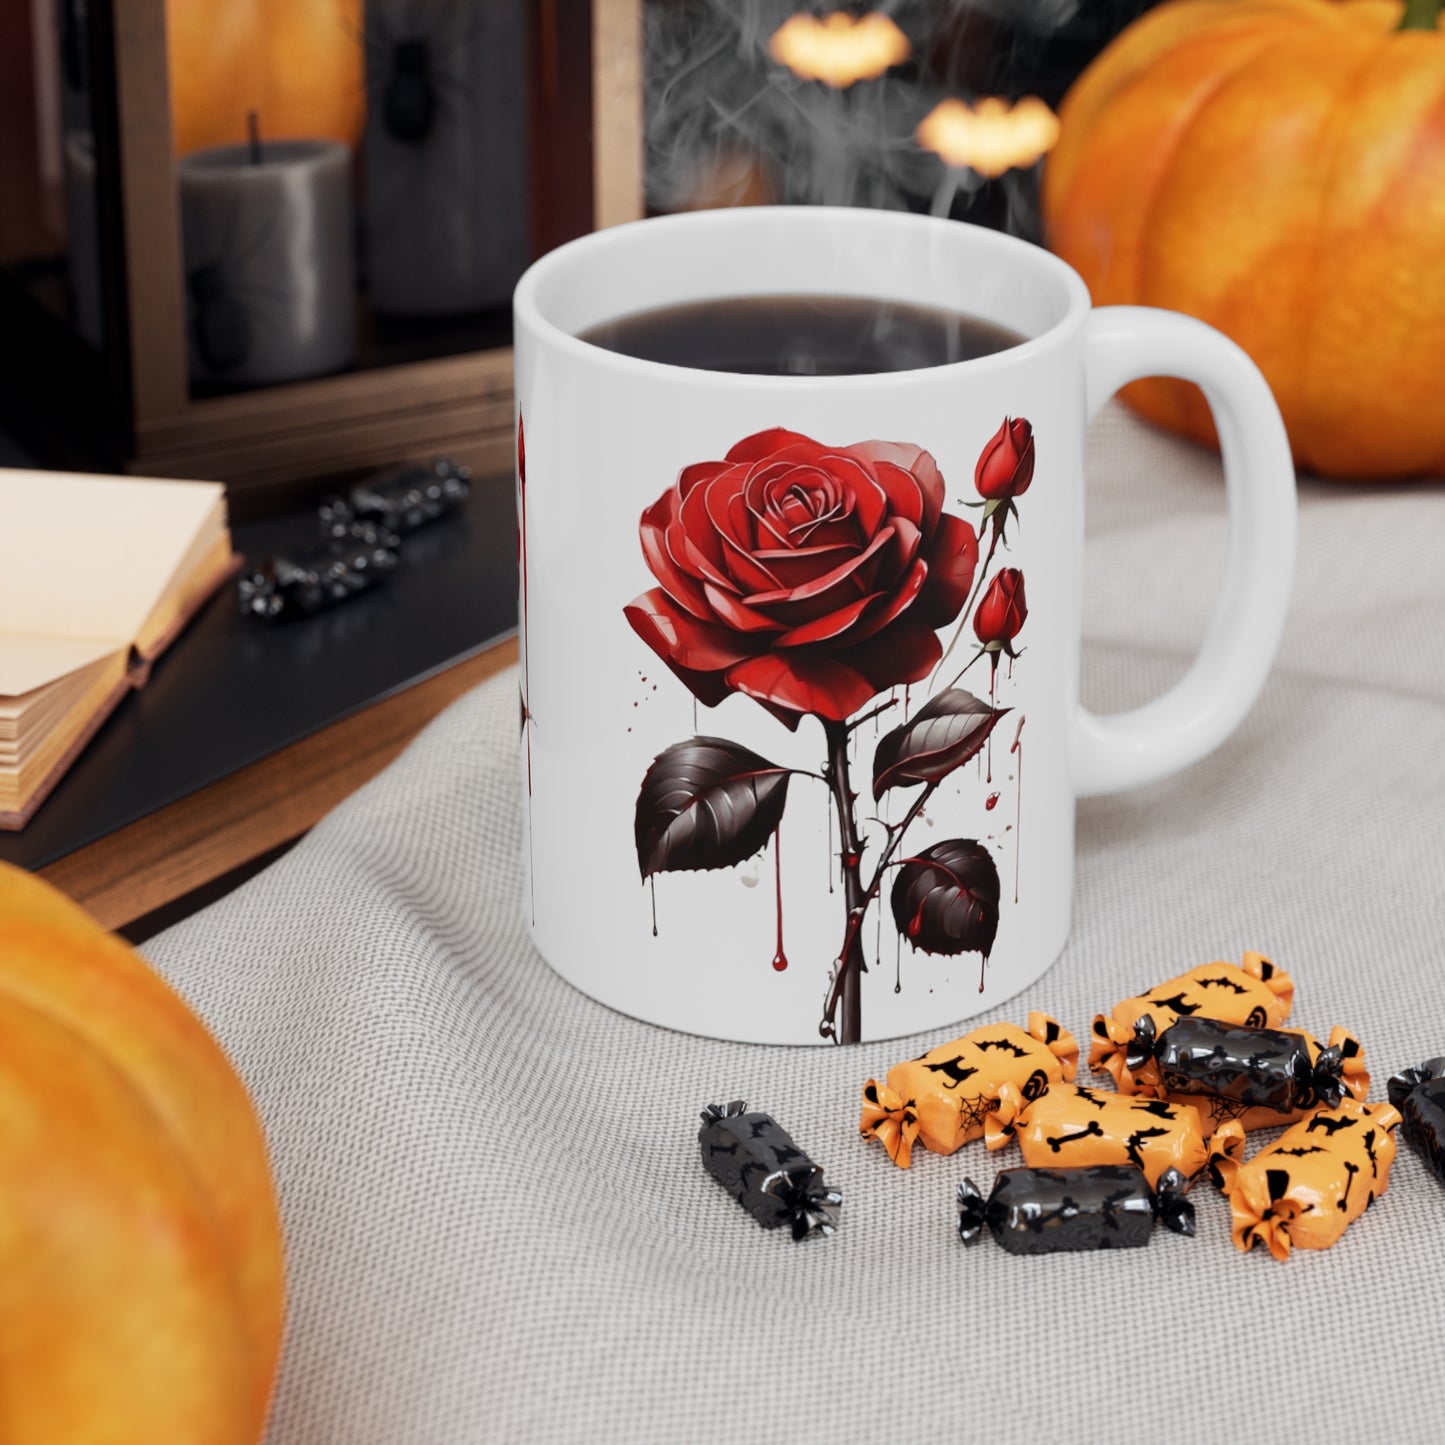 Painted Red Roses Mug - Ceramic Coffee Mug 11oz